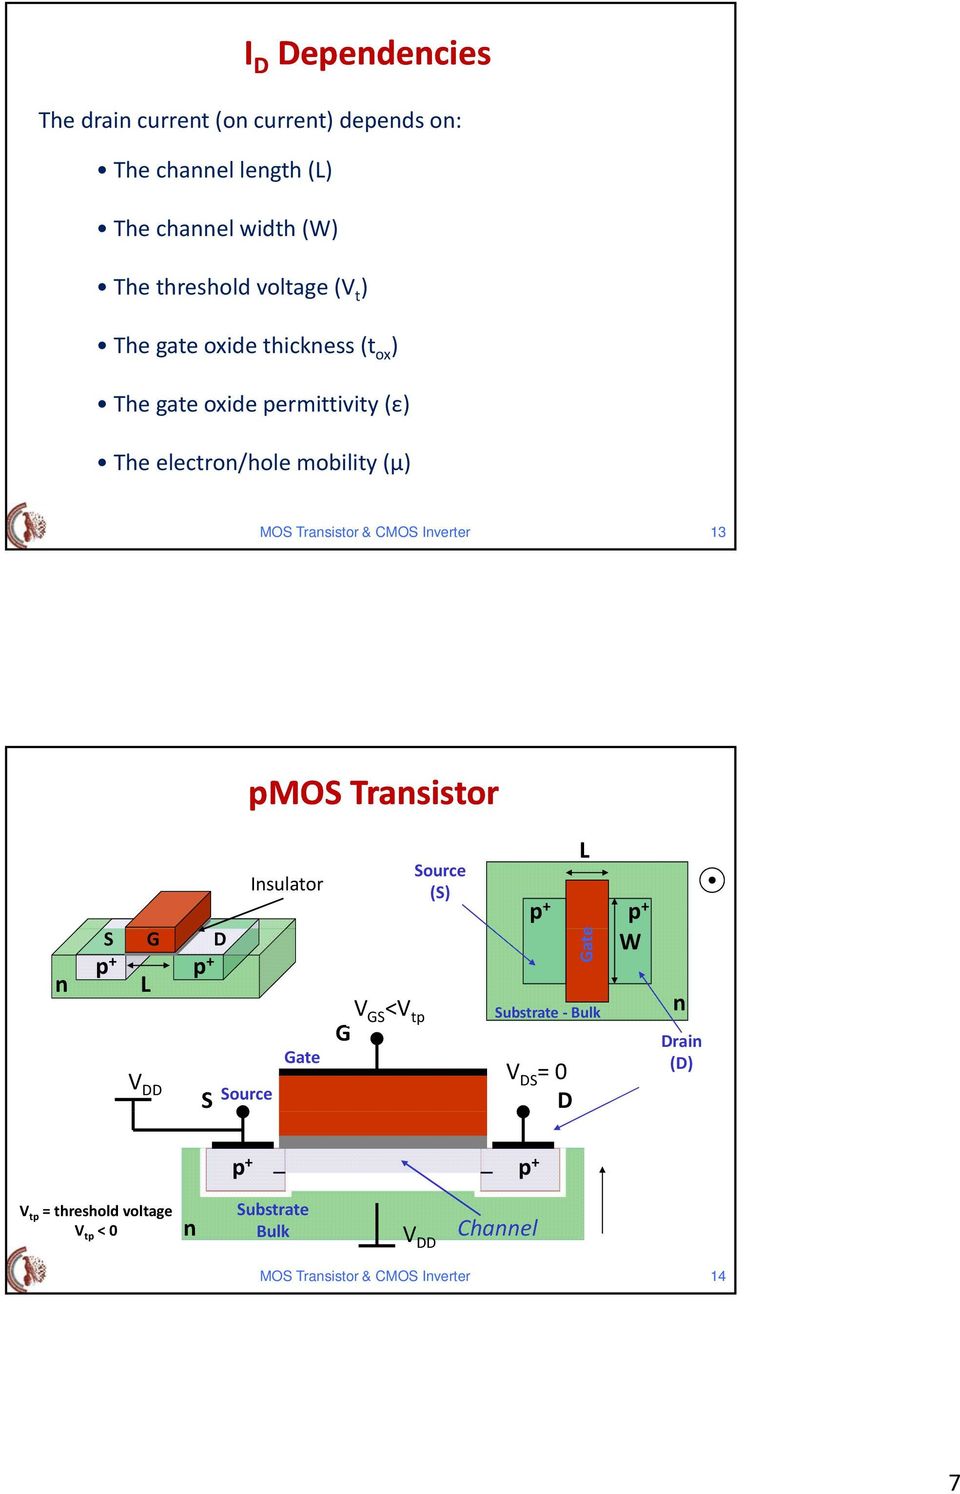 CMOS Iverter 13 pmos Trasistor Isulator S G p + L p + S Gate Source V GS V <V0 tp G Source (S) L p + p + V S 0 Gate